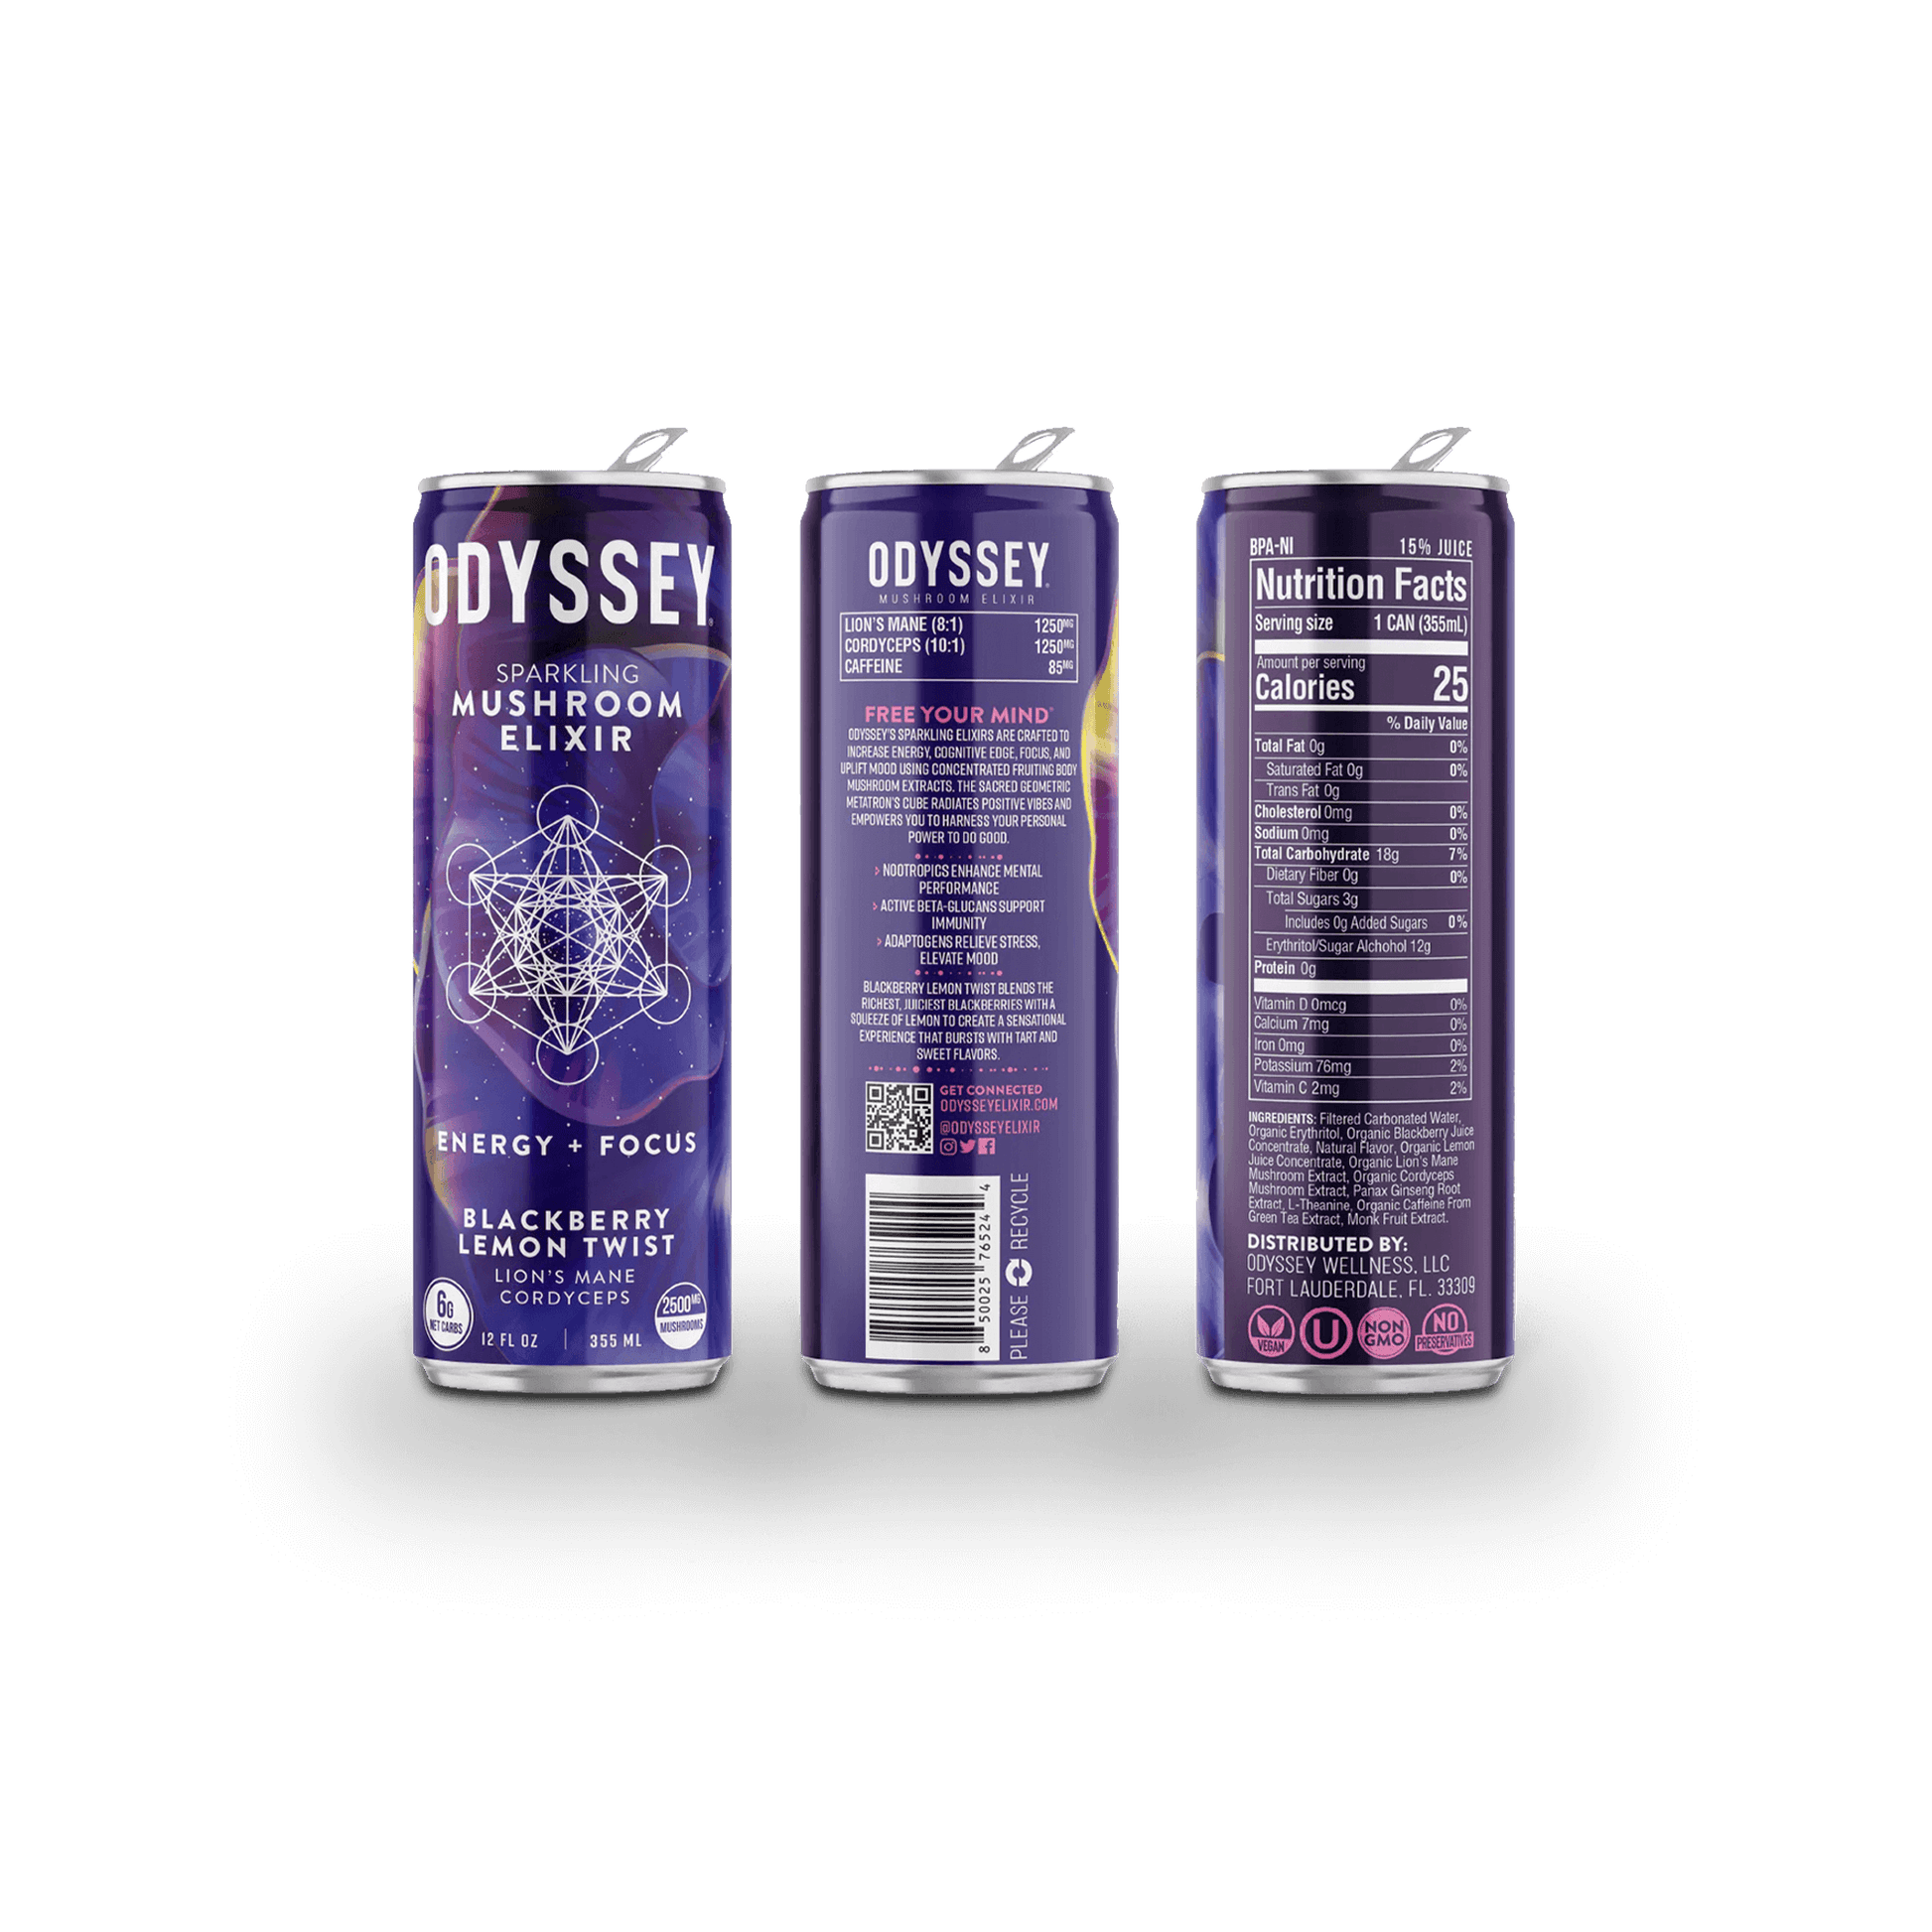 Odyssey Mushroom Elixir | Energy & Focus - Blackberry Lemon Twist Back Label